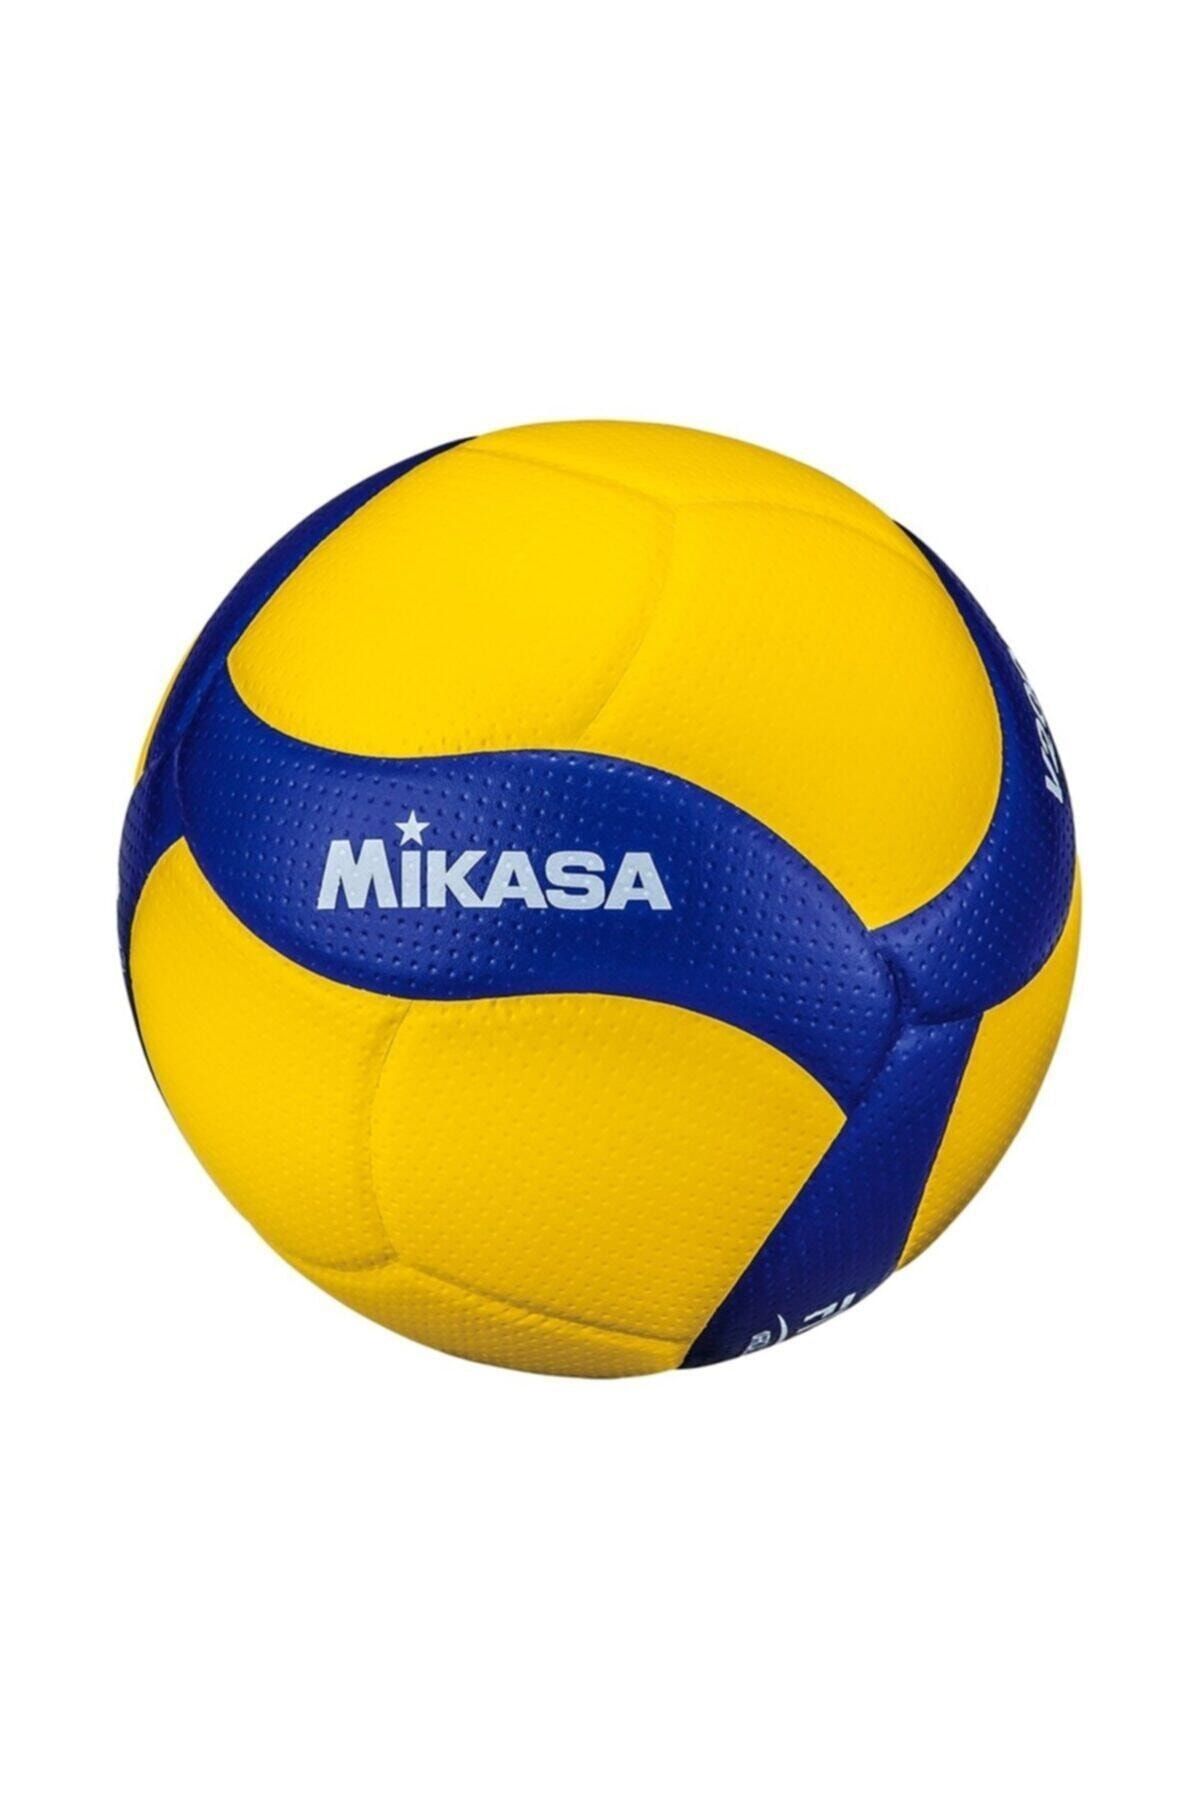 MIKASA V200w Fıvb Approved (onaylı) Özel Resmi Voleybol Maç Topu